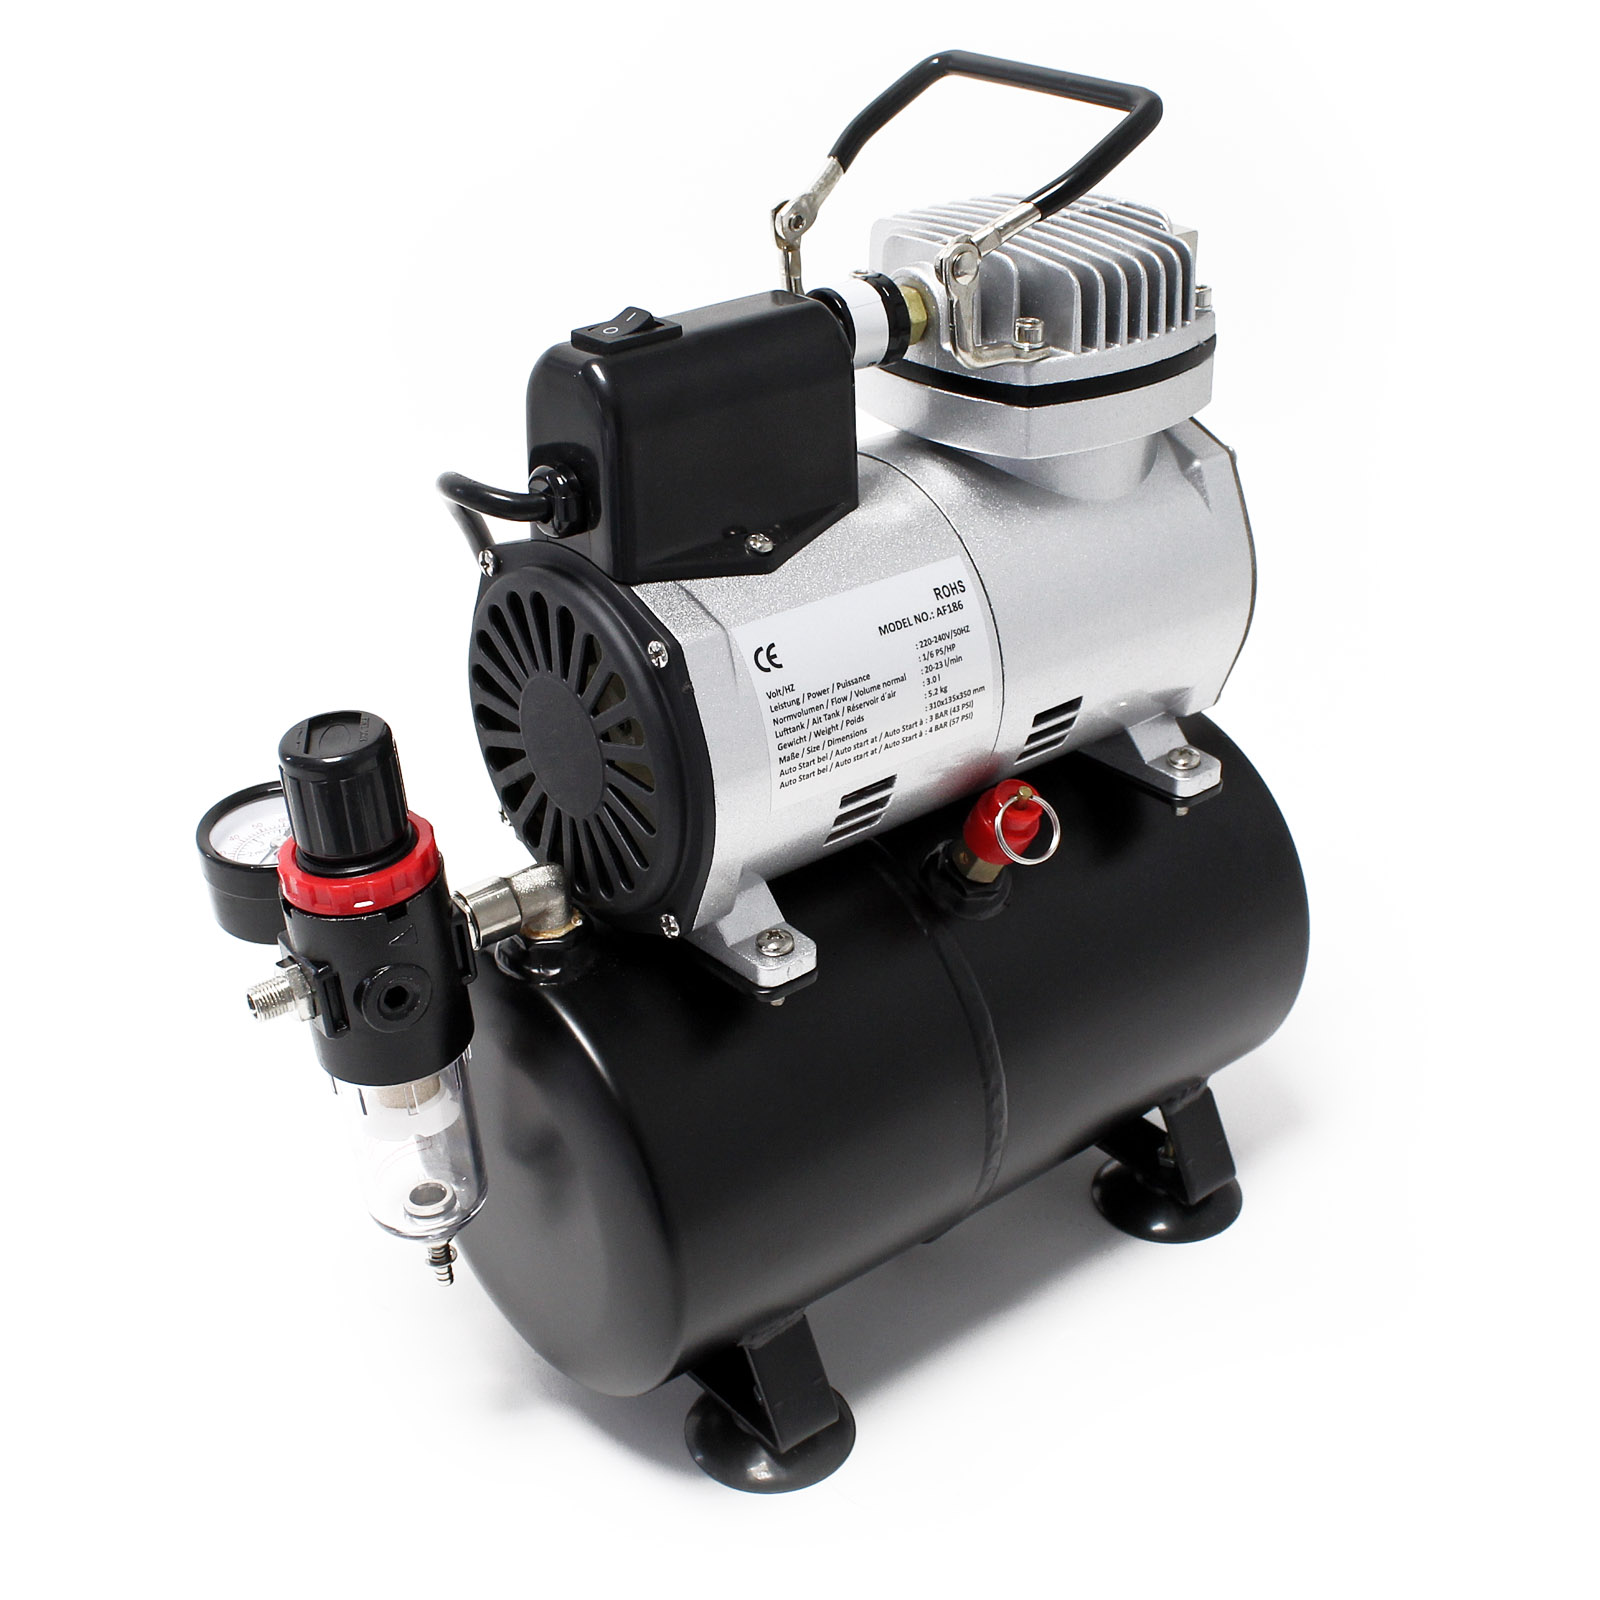 Compressore del Airbrush AF186 pressione serbatoio di aria ridutt